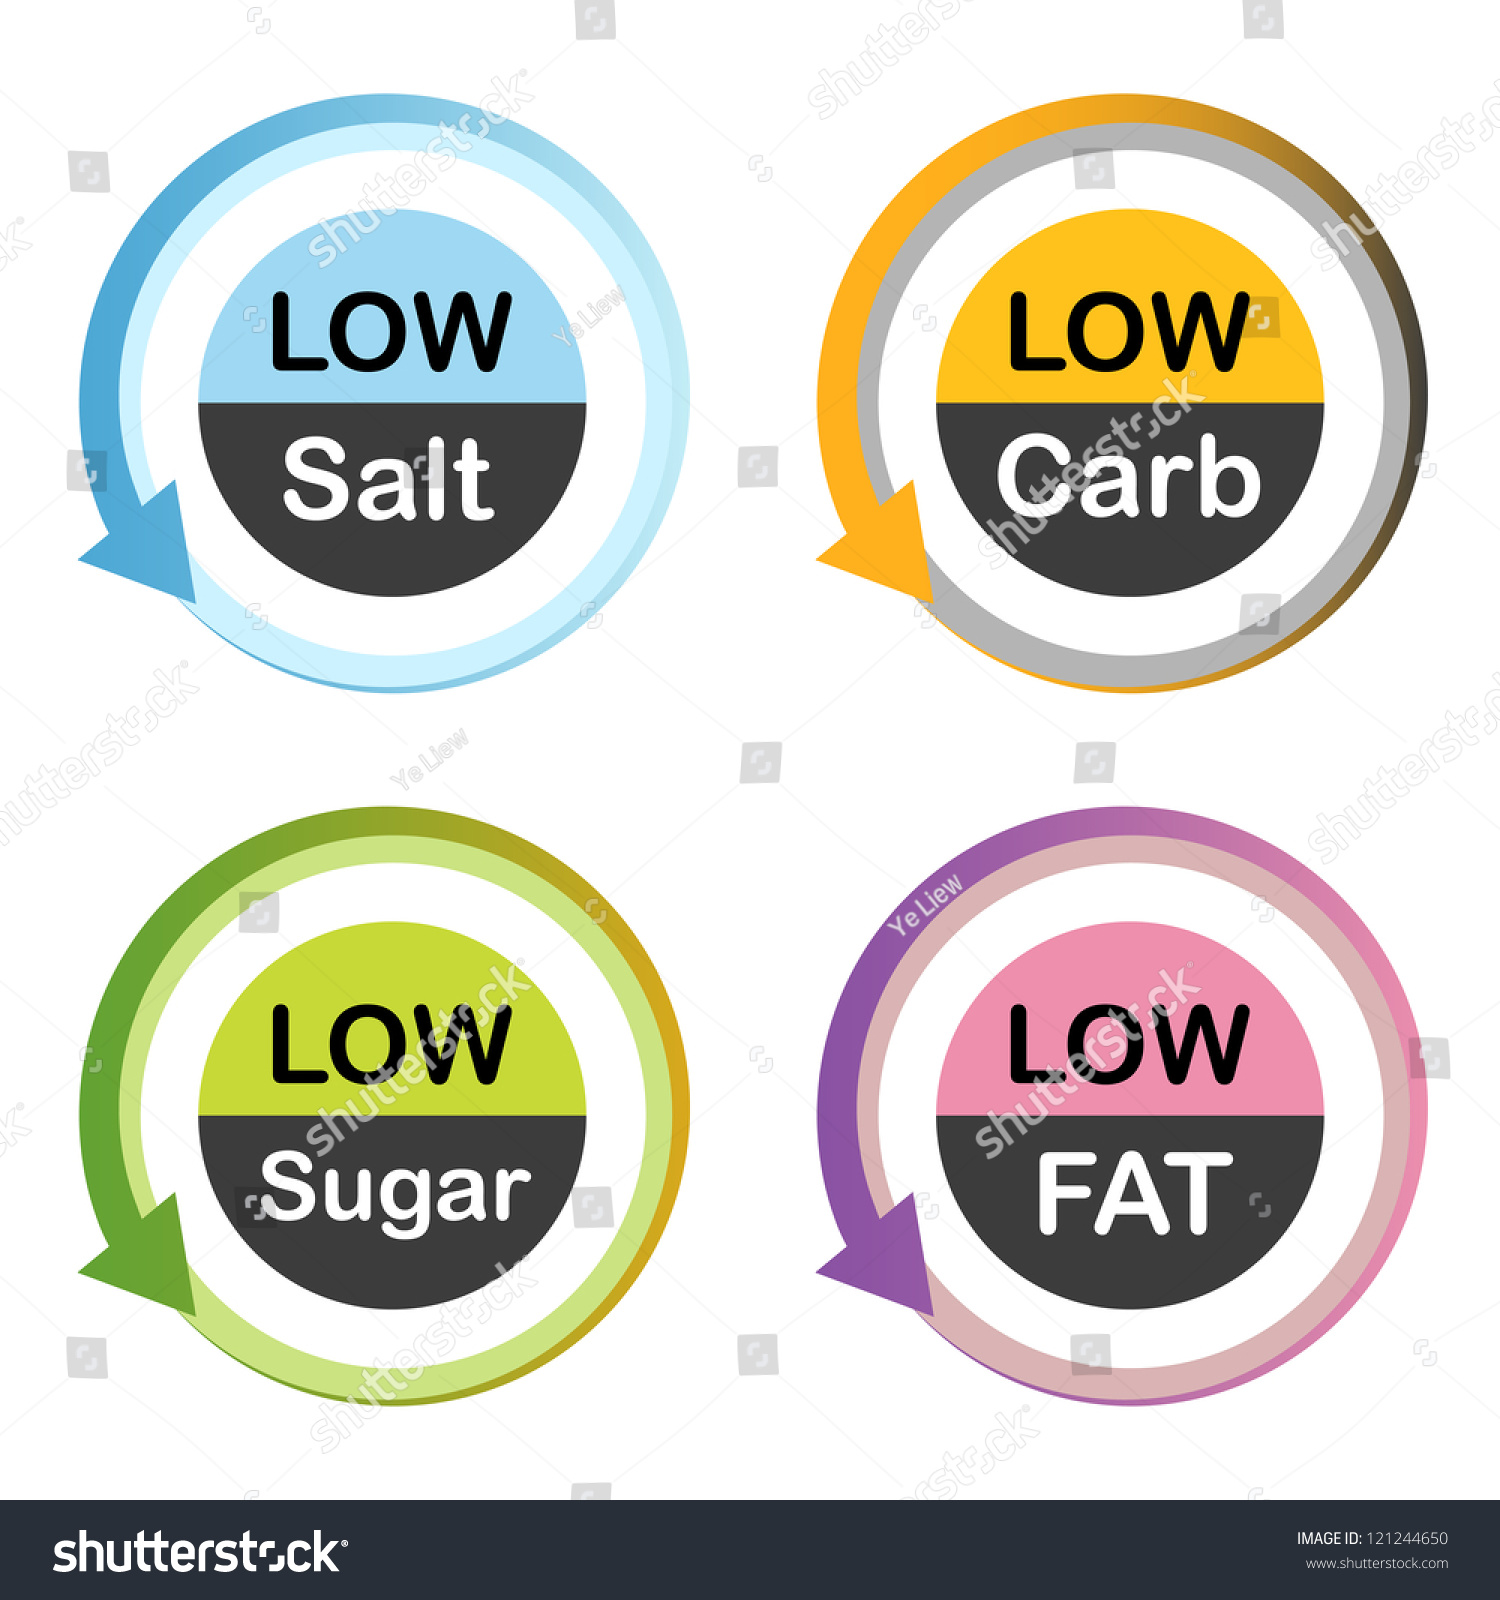 Low Carb Low Sugar Low Fat 28